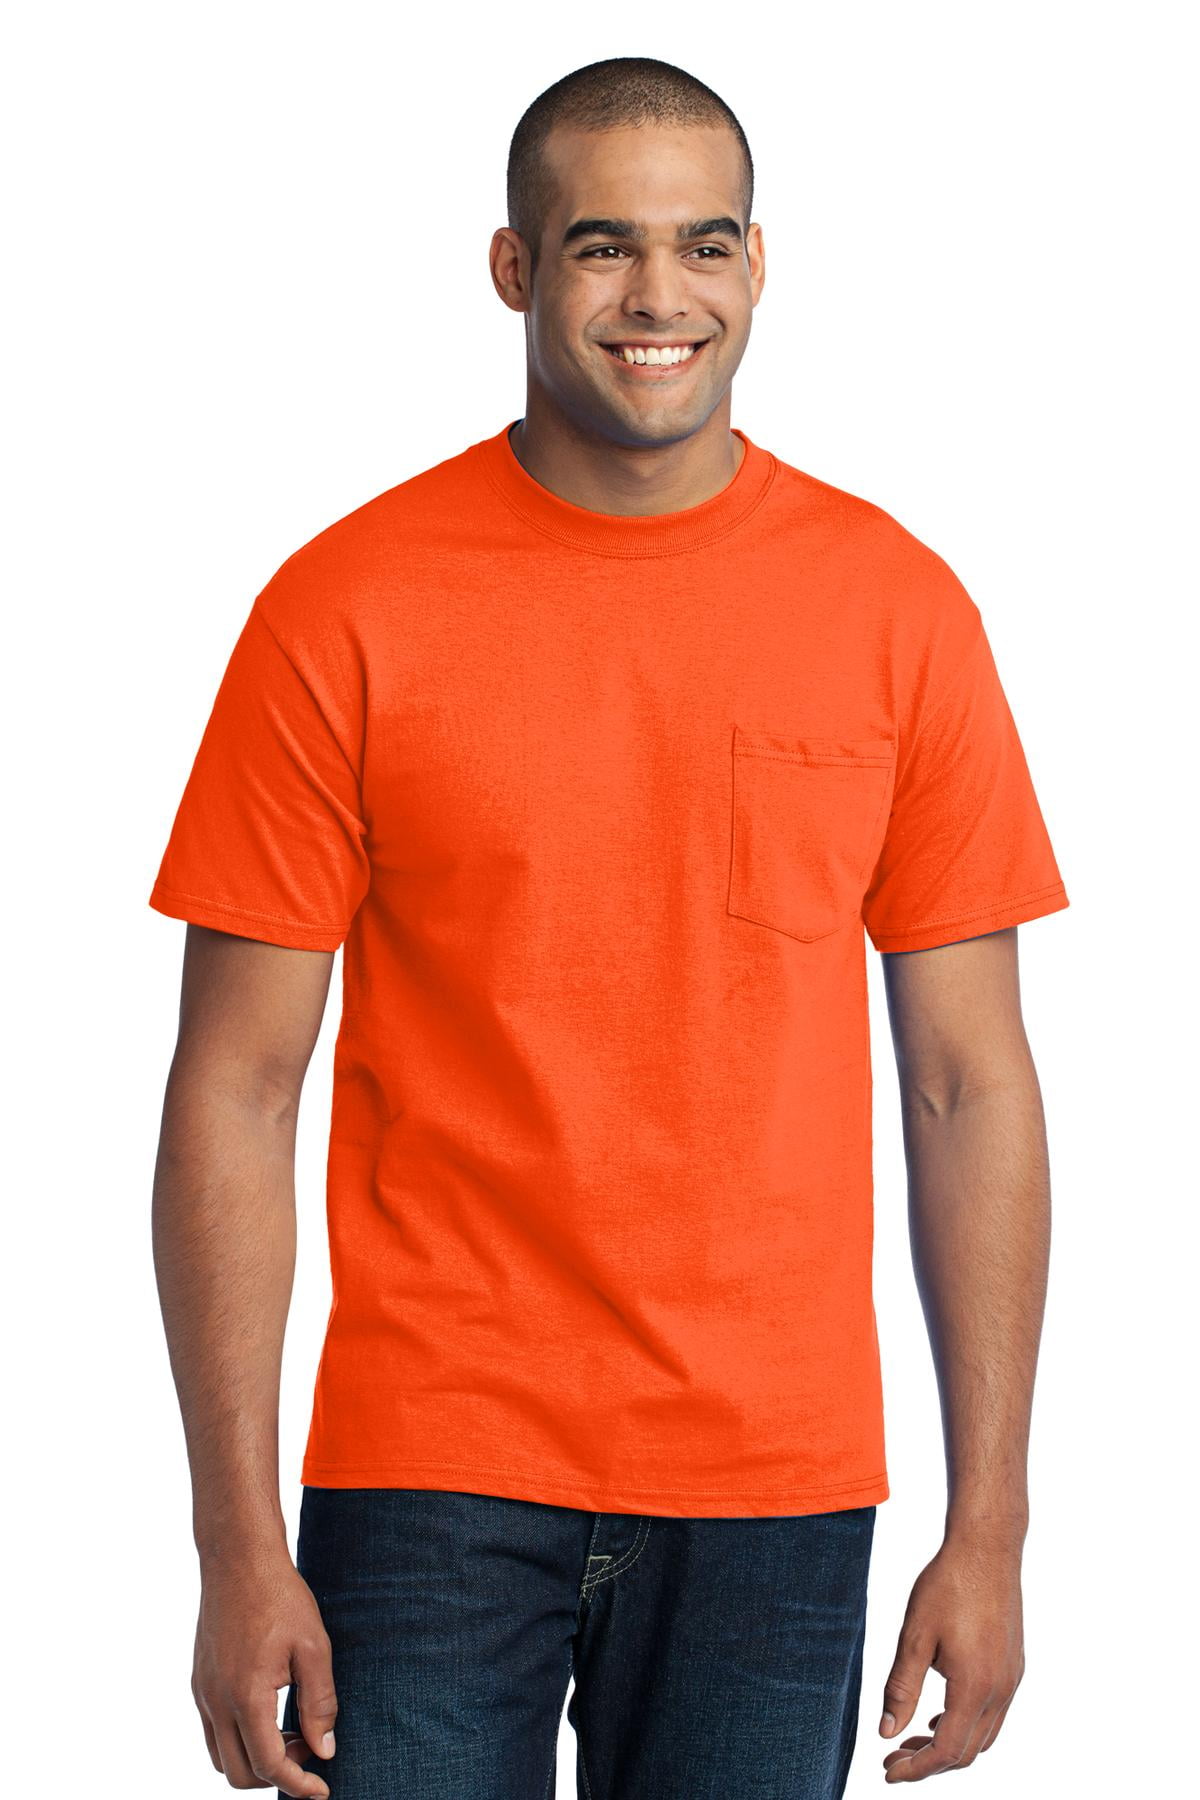 Port & Co Adult Male Men Plain Short Sleeves T-Shirt Safety Orange ...